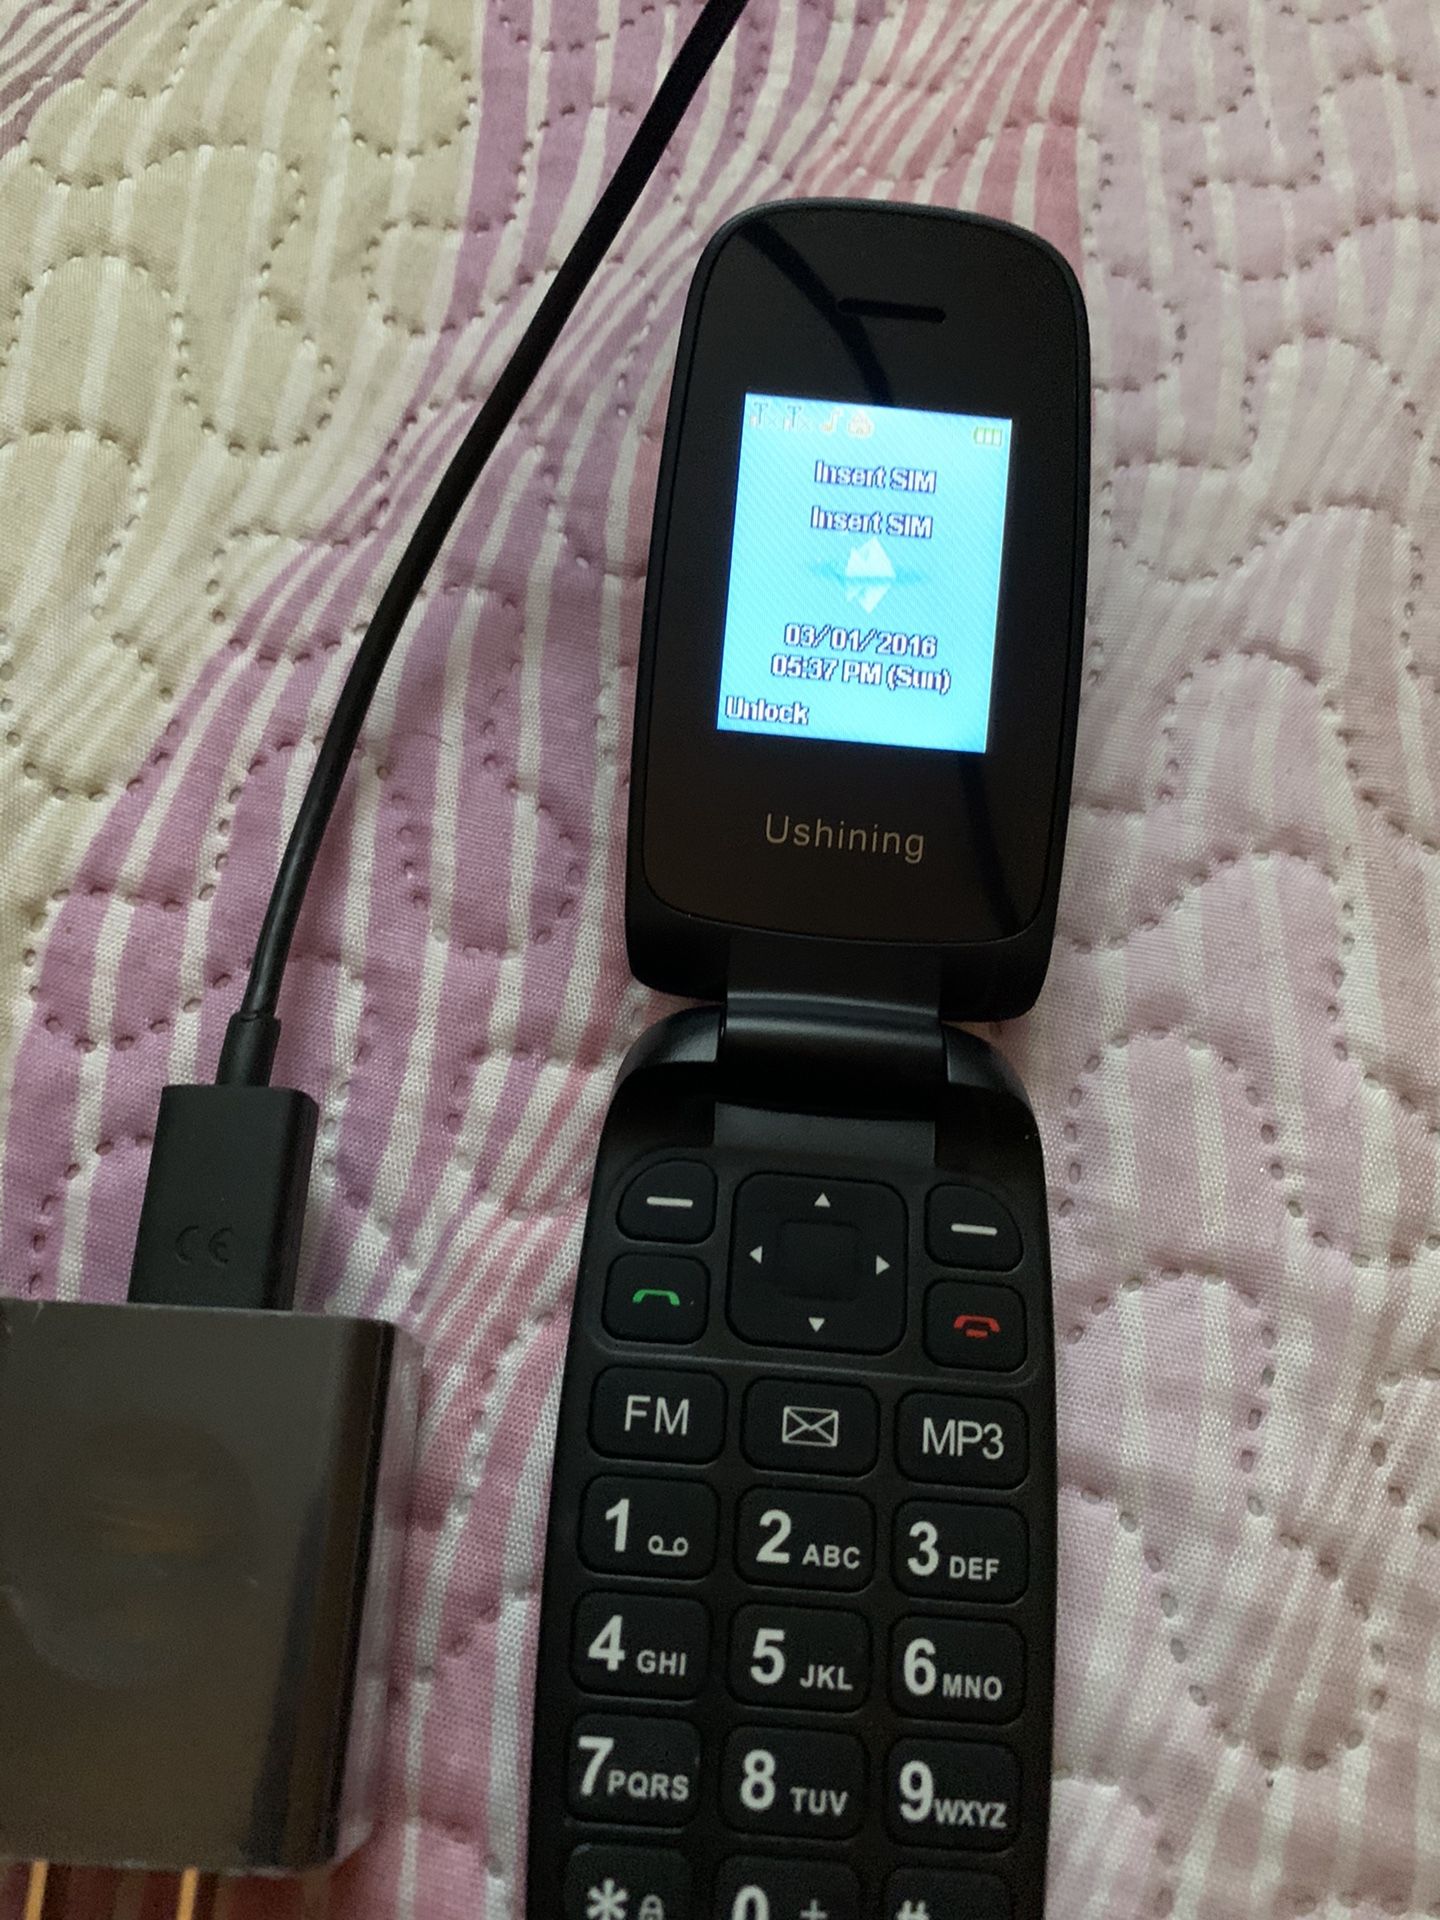 Ushinning senior cell phone unlocked